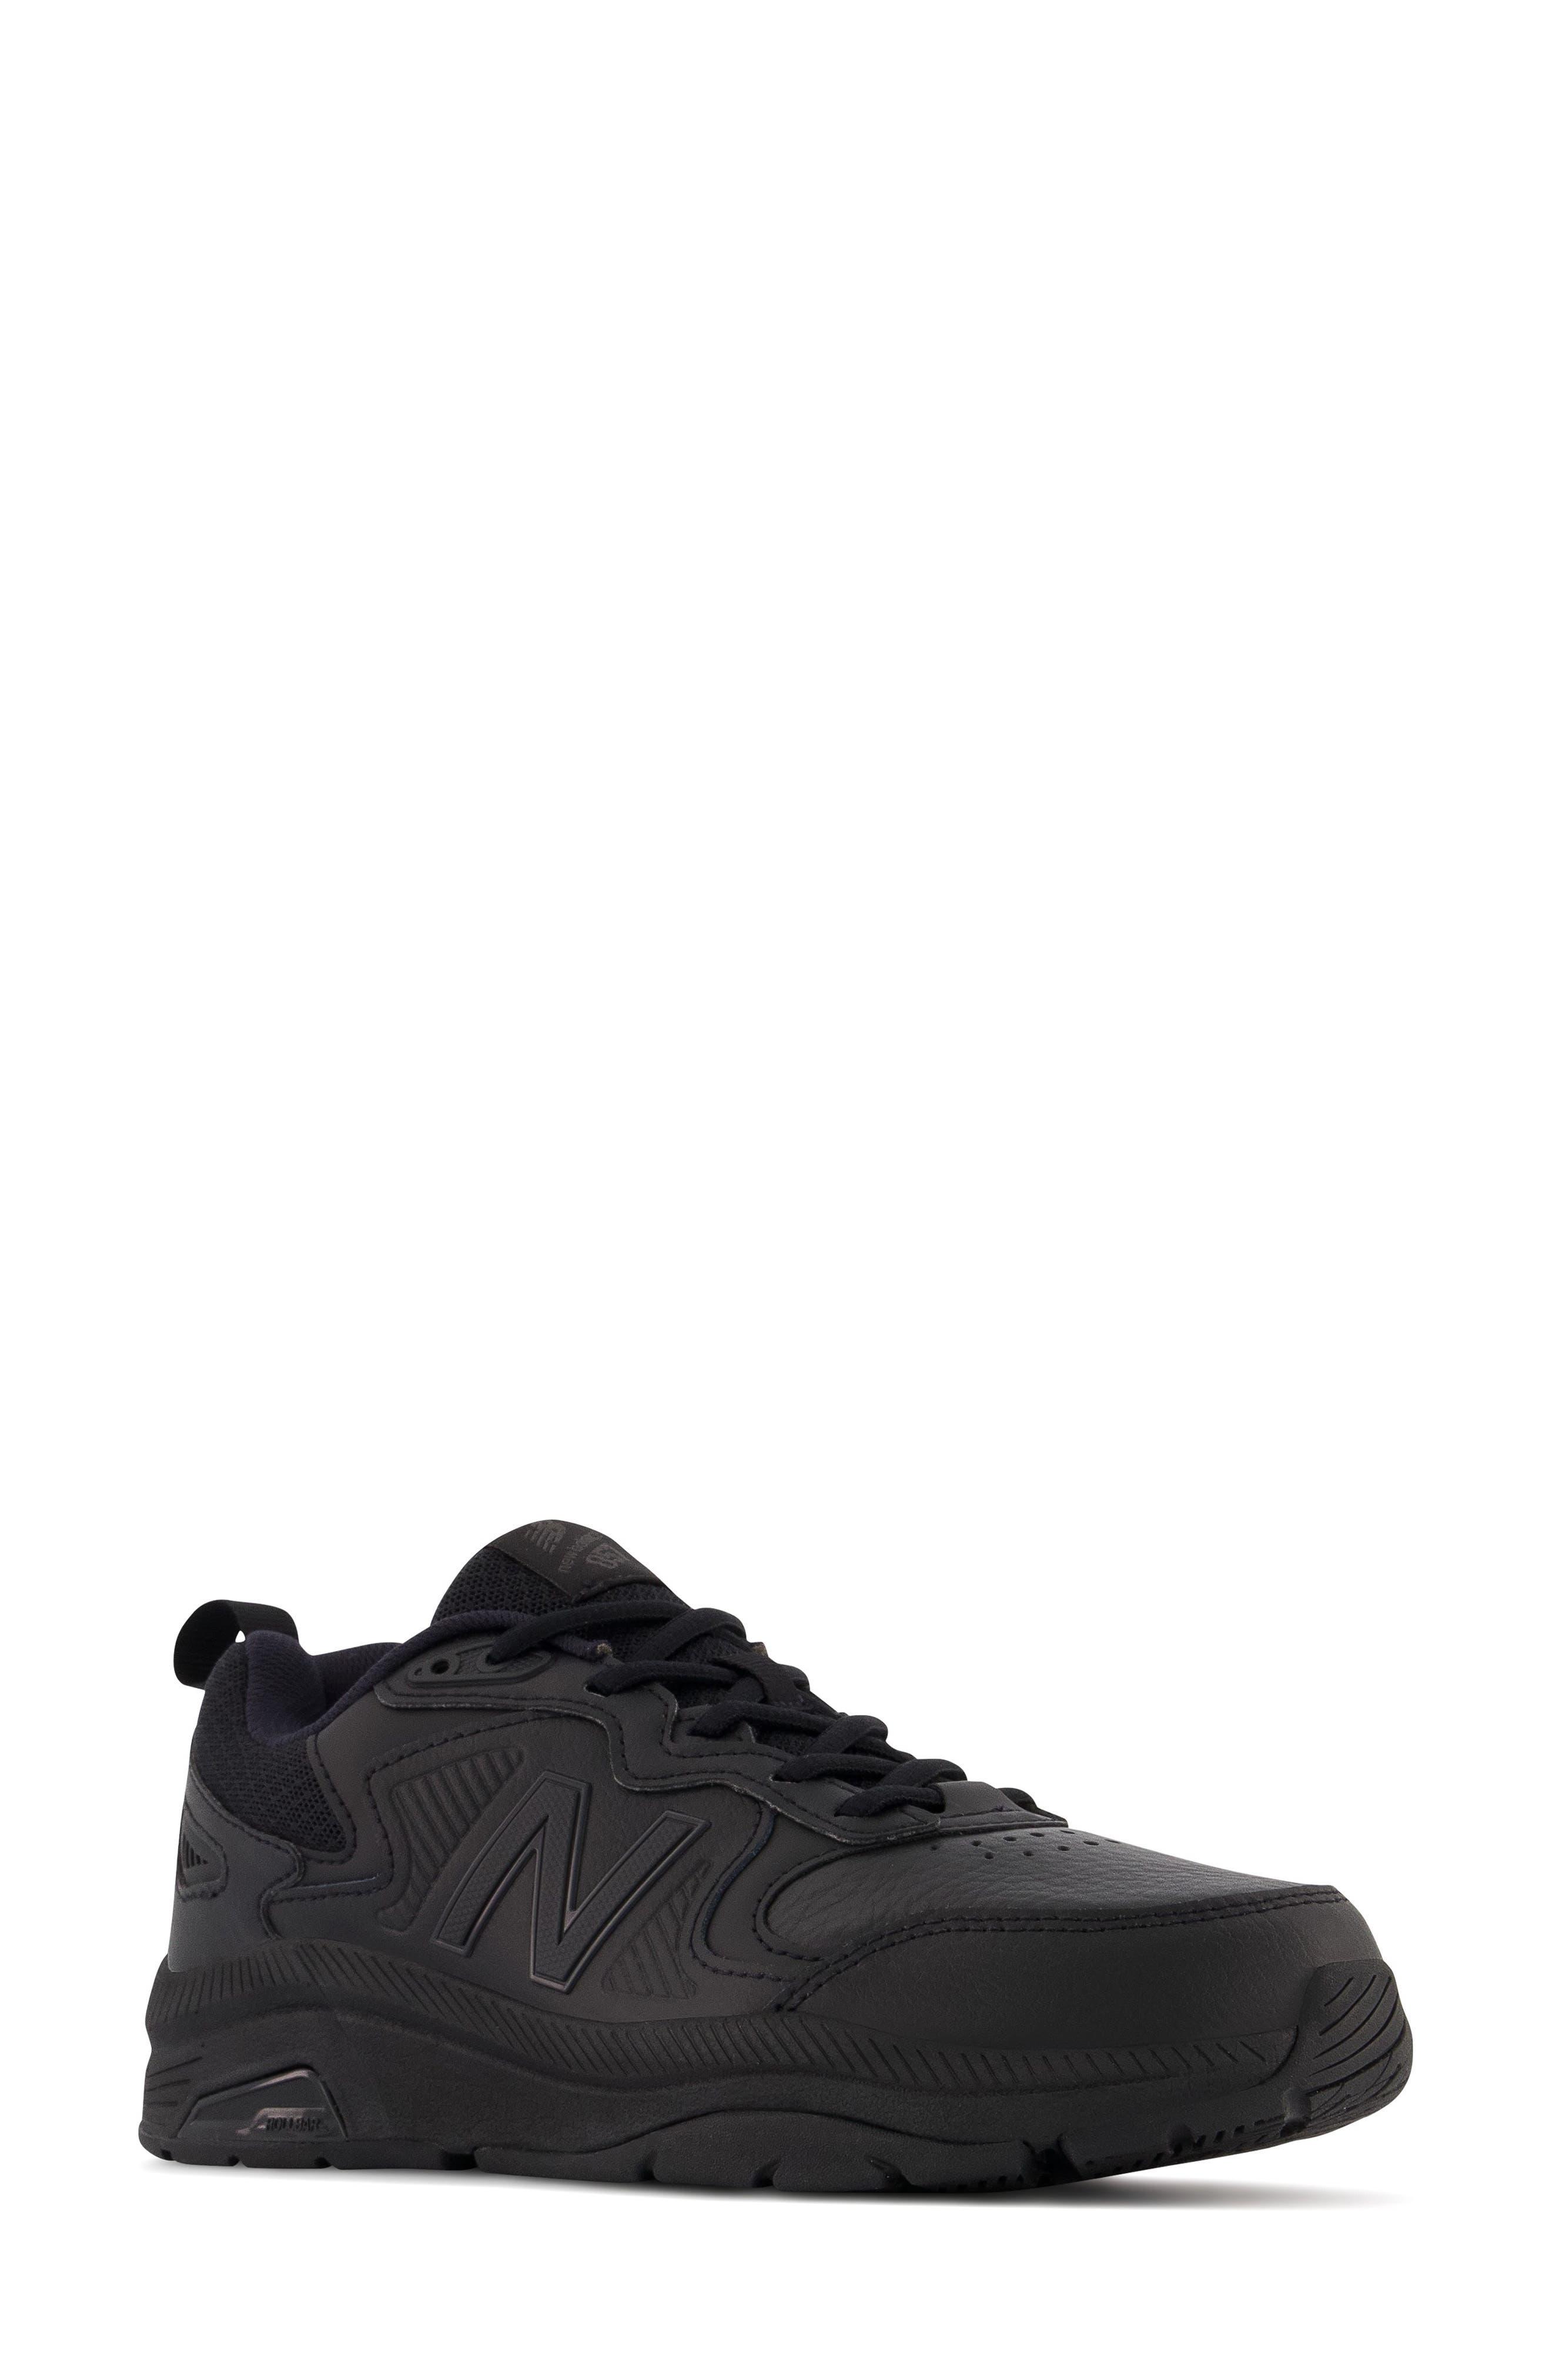 New Balance Mx 857 V3 Training Shoe in Black | Lyst